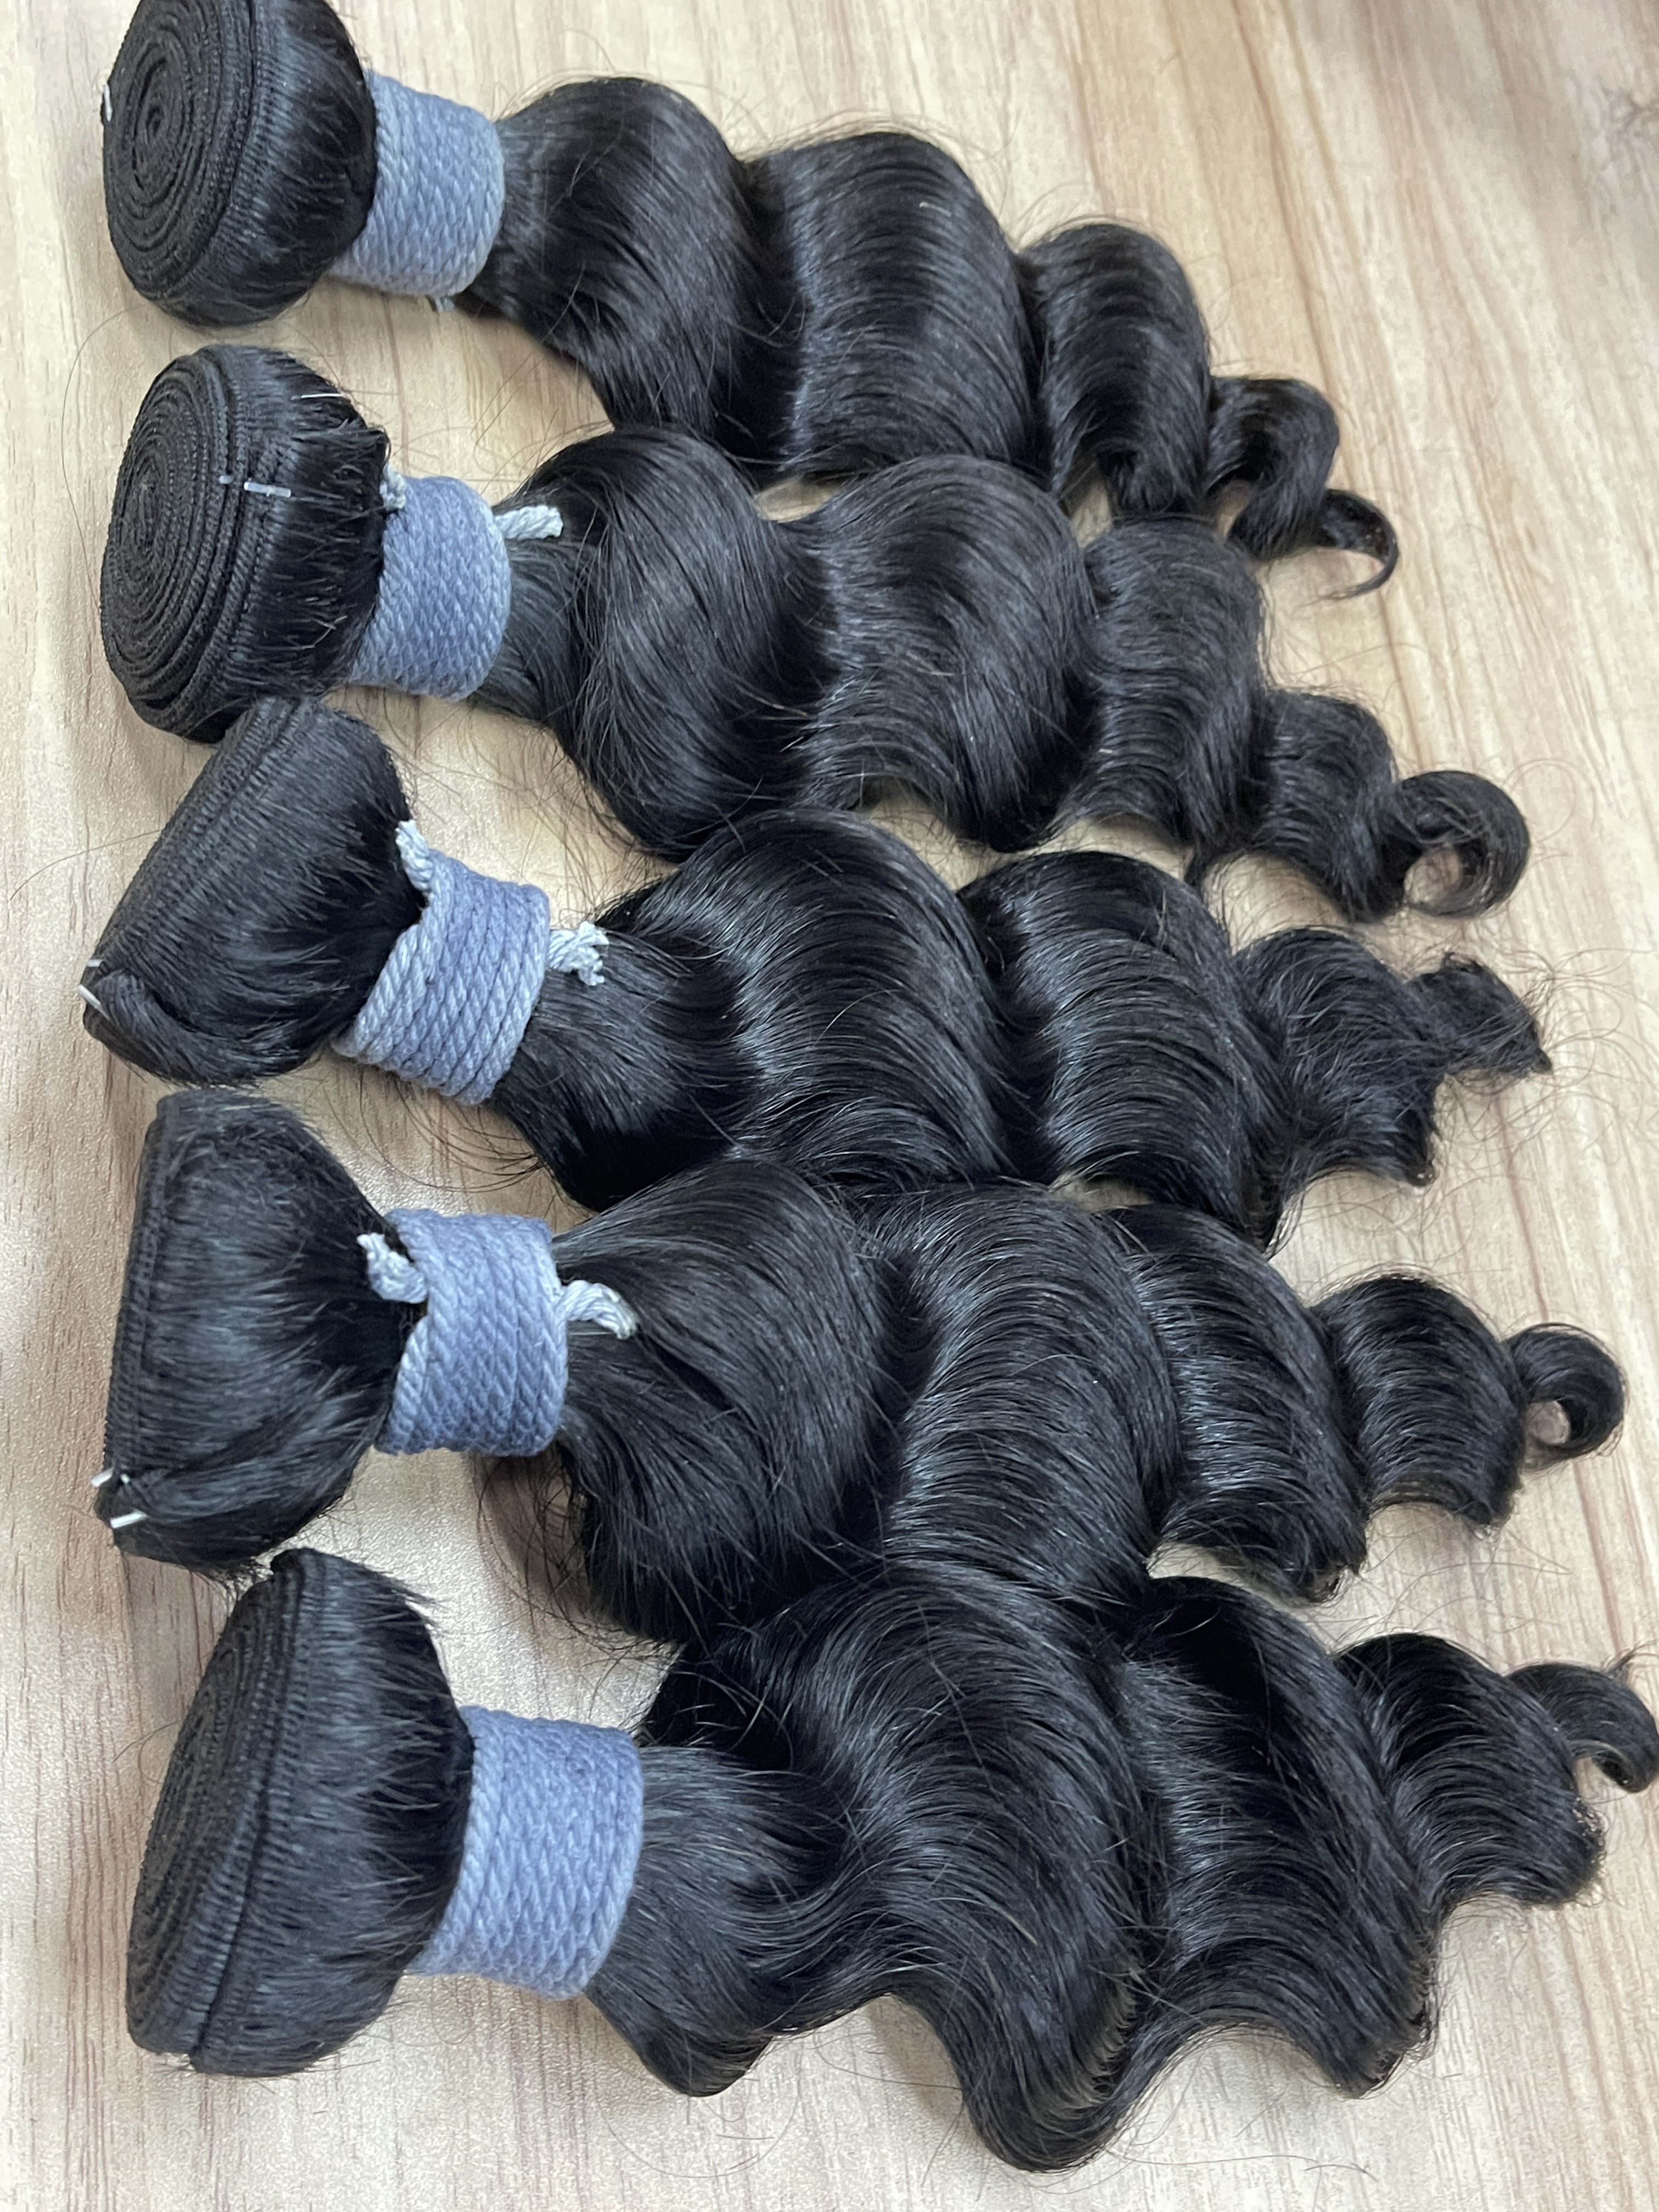 Angelbella Loose Deep Wave Bundles (10''-30'')Long Loose Deep Curly Hair 12A Peruvian Virgin Hair 3 Bundles With Closure